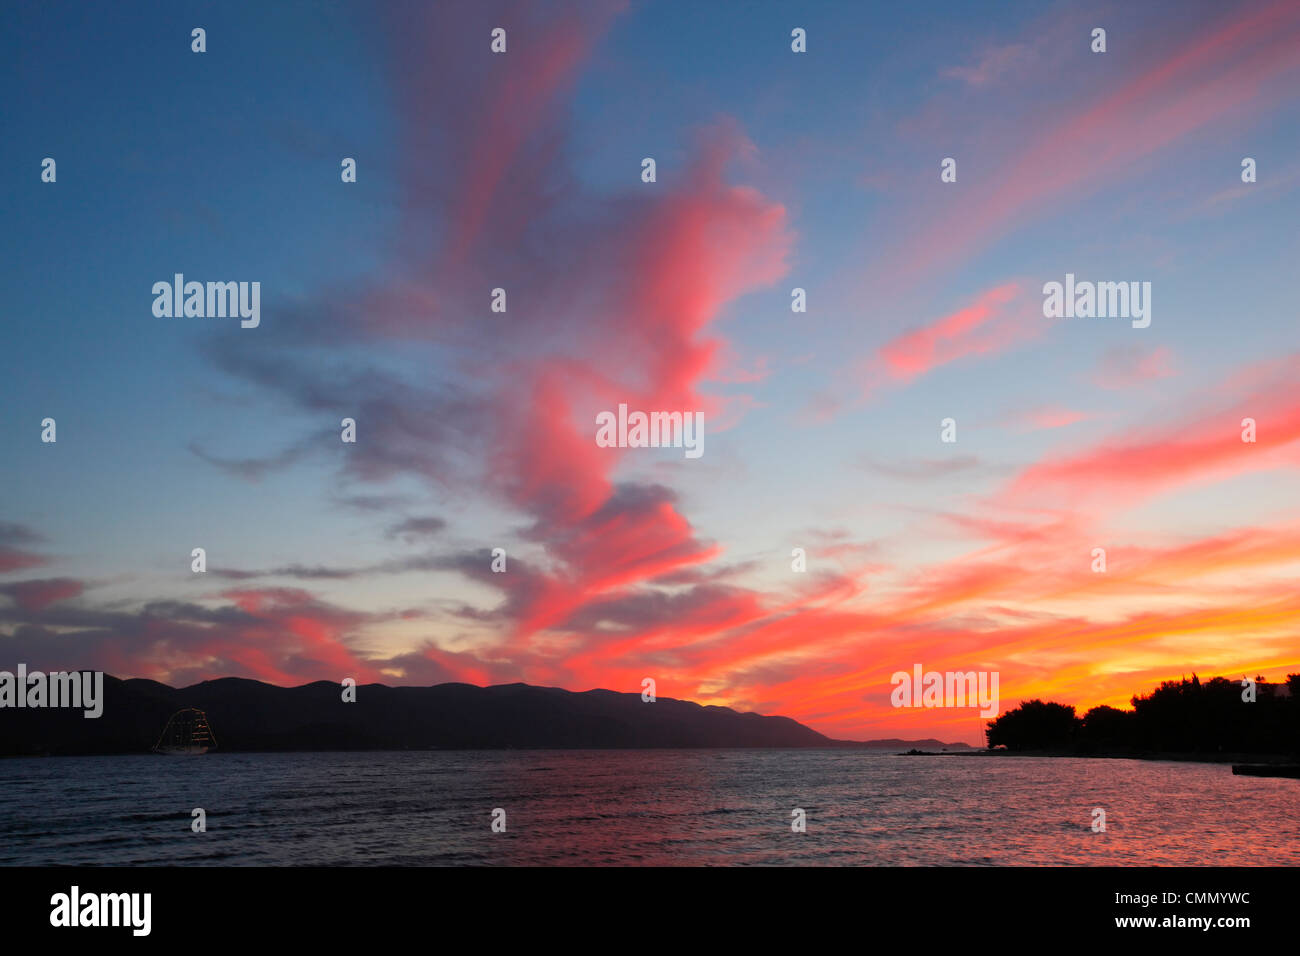 Sunset over Island Korcula Stock Photo